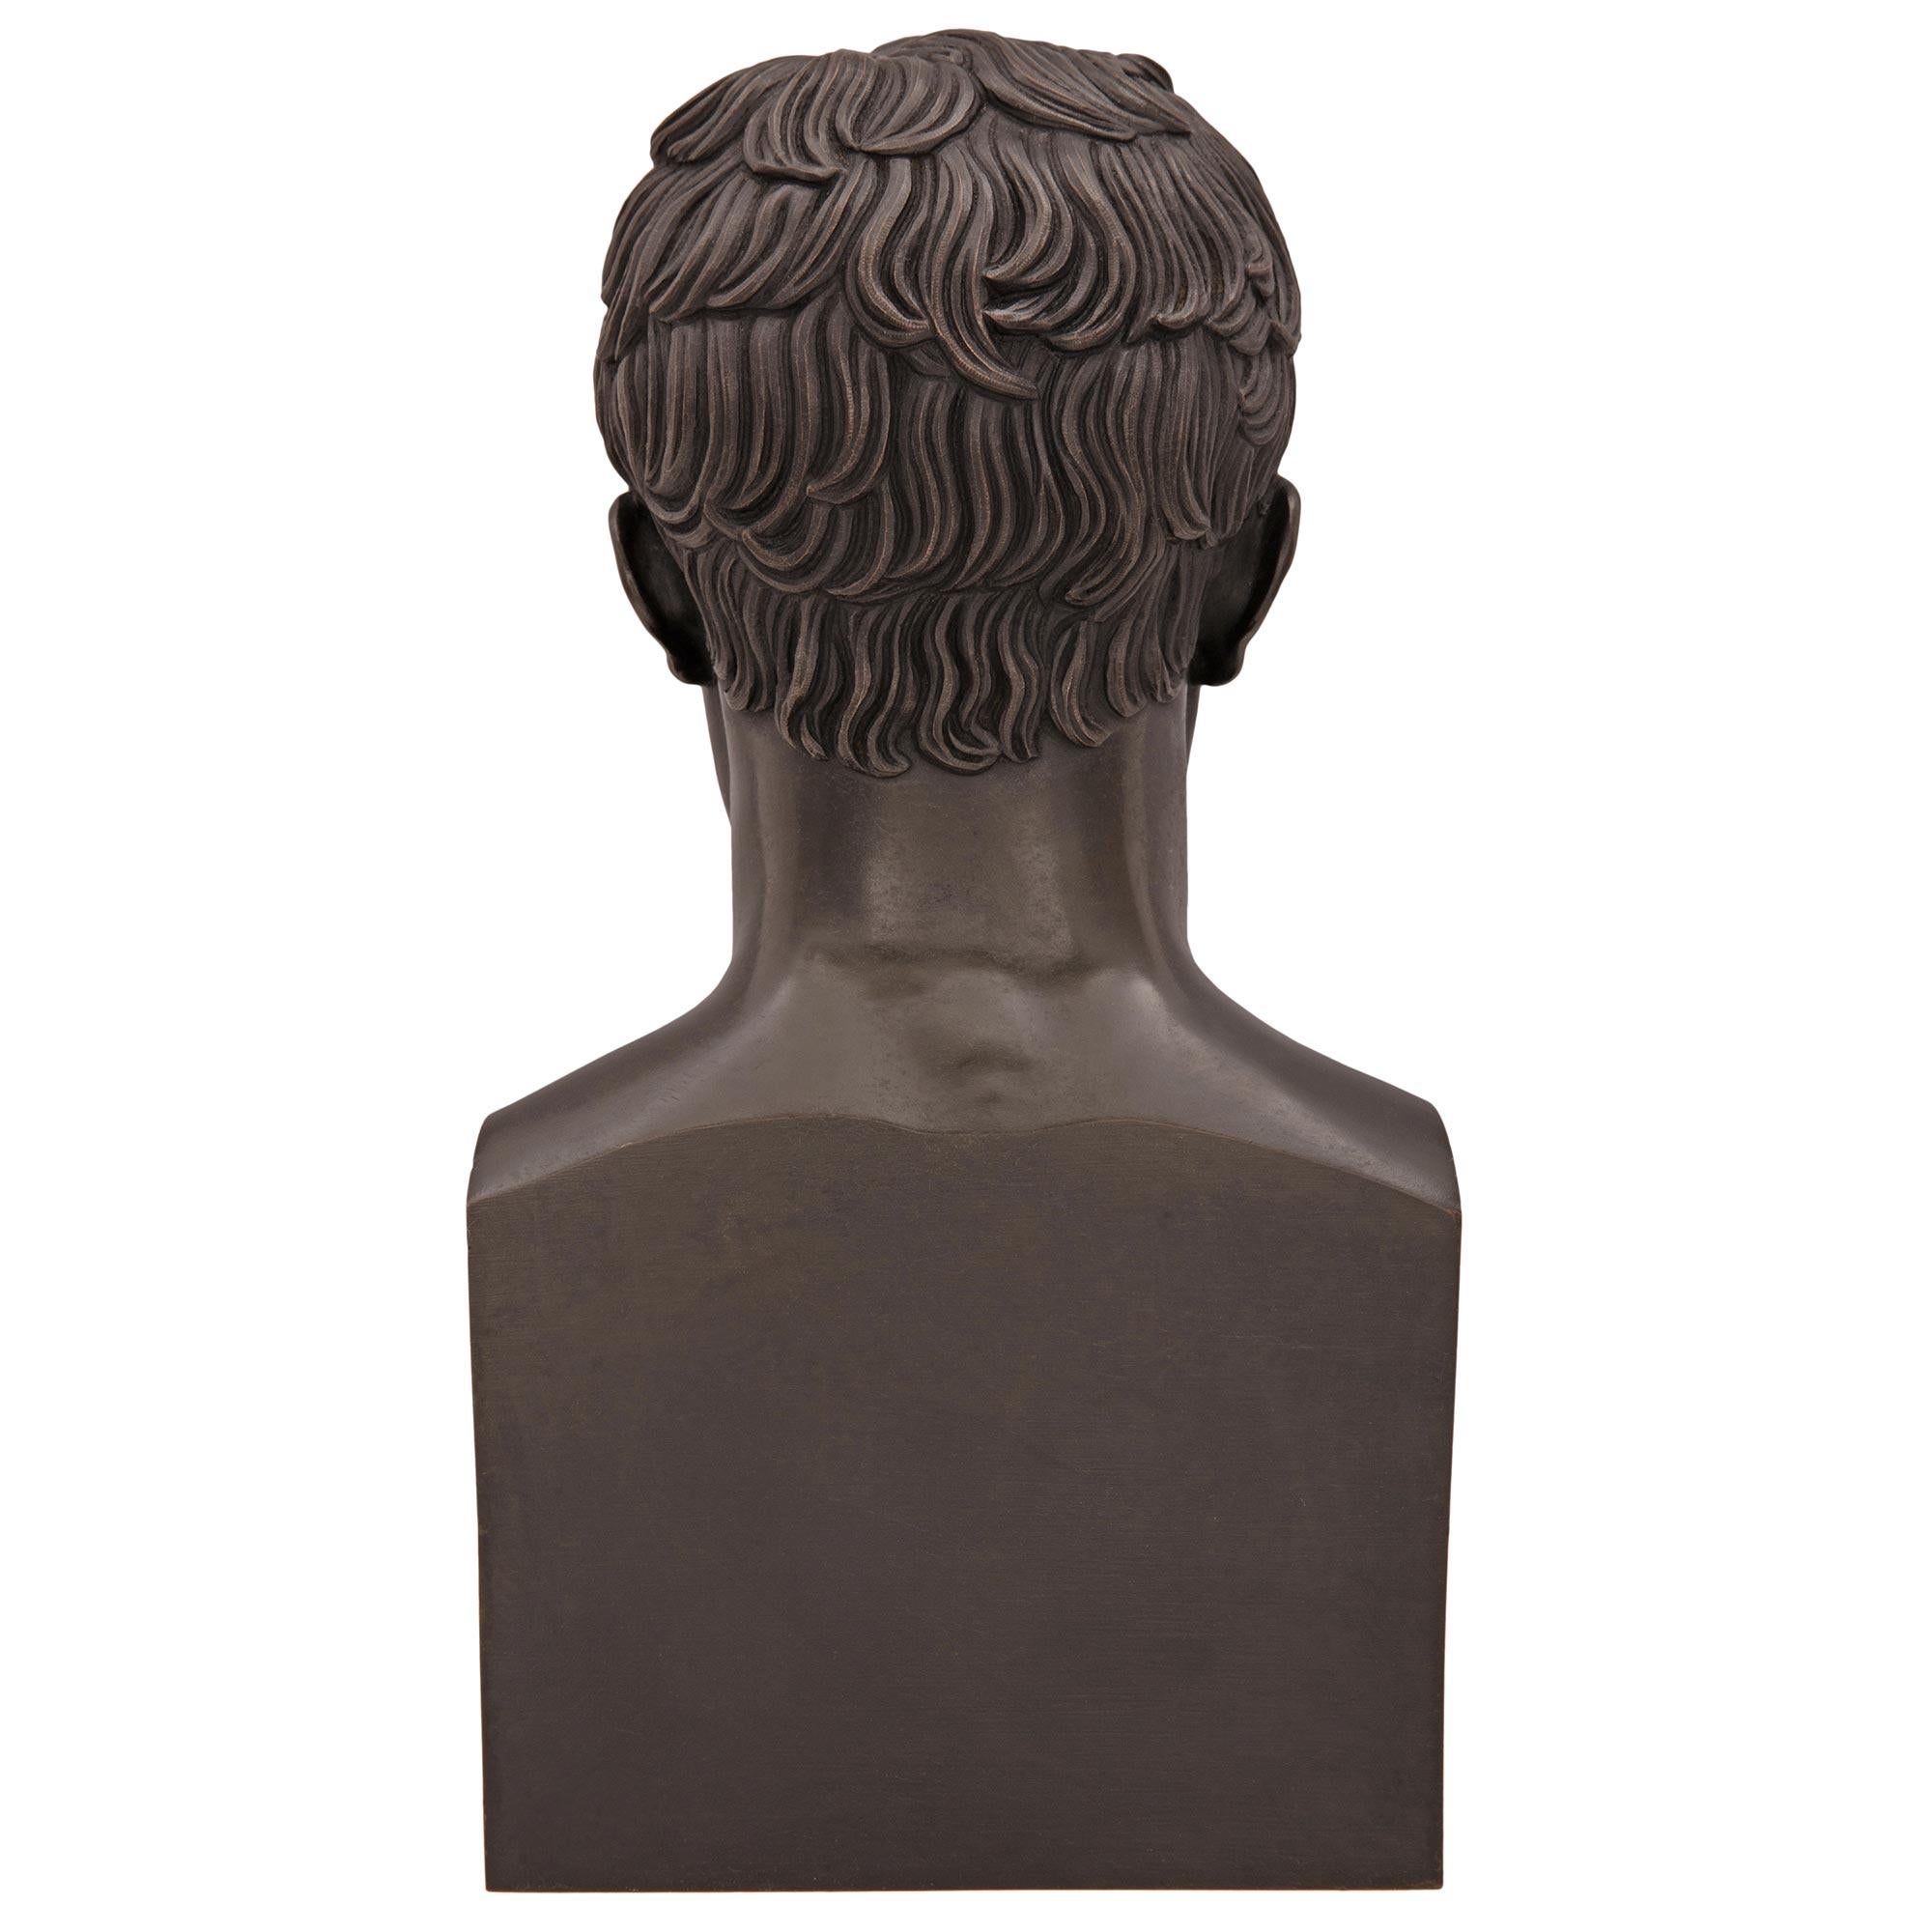 antonio canova bust of napoleon